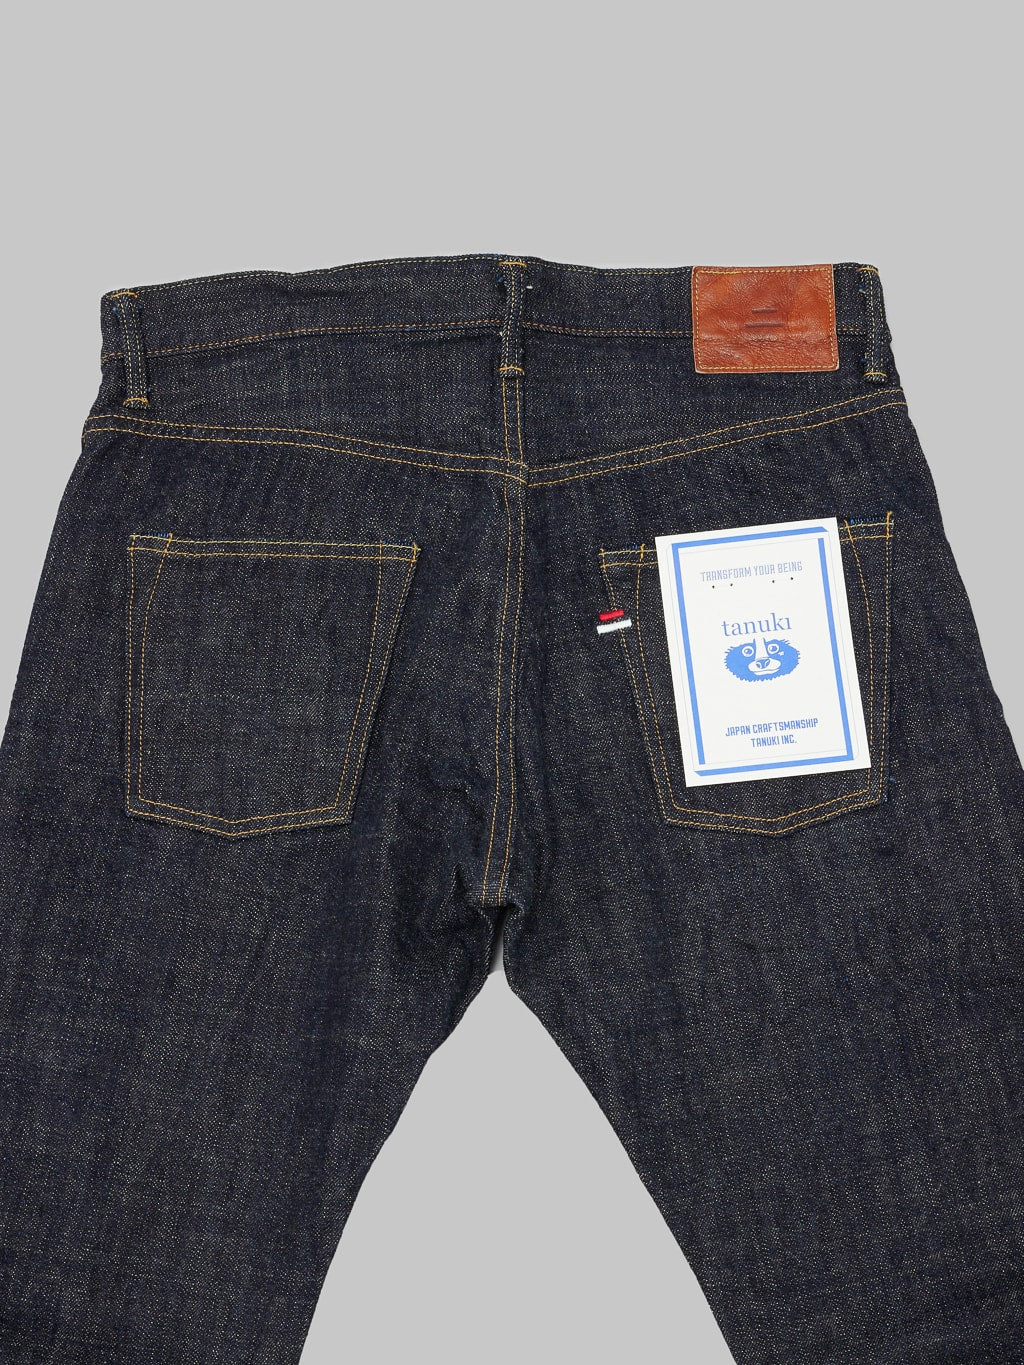 Tanuki Zetto Benkei High Tapered Jeans back pockets fabric